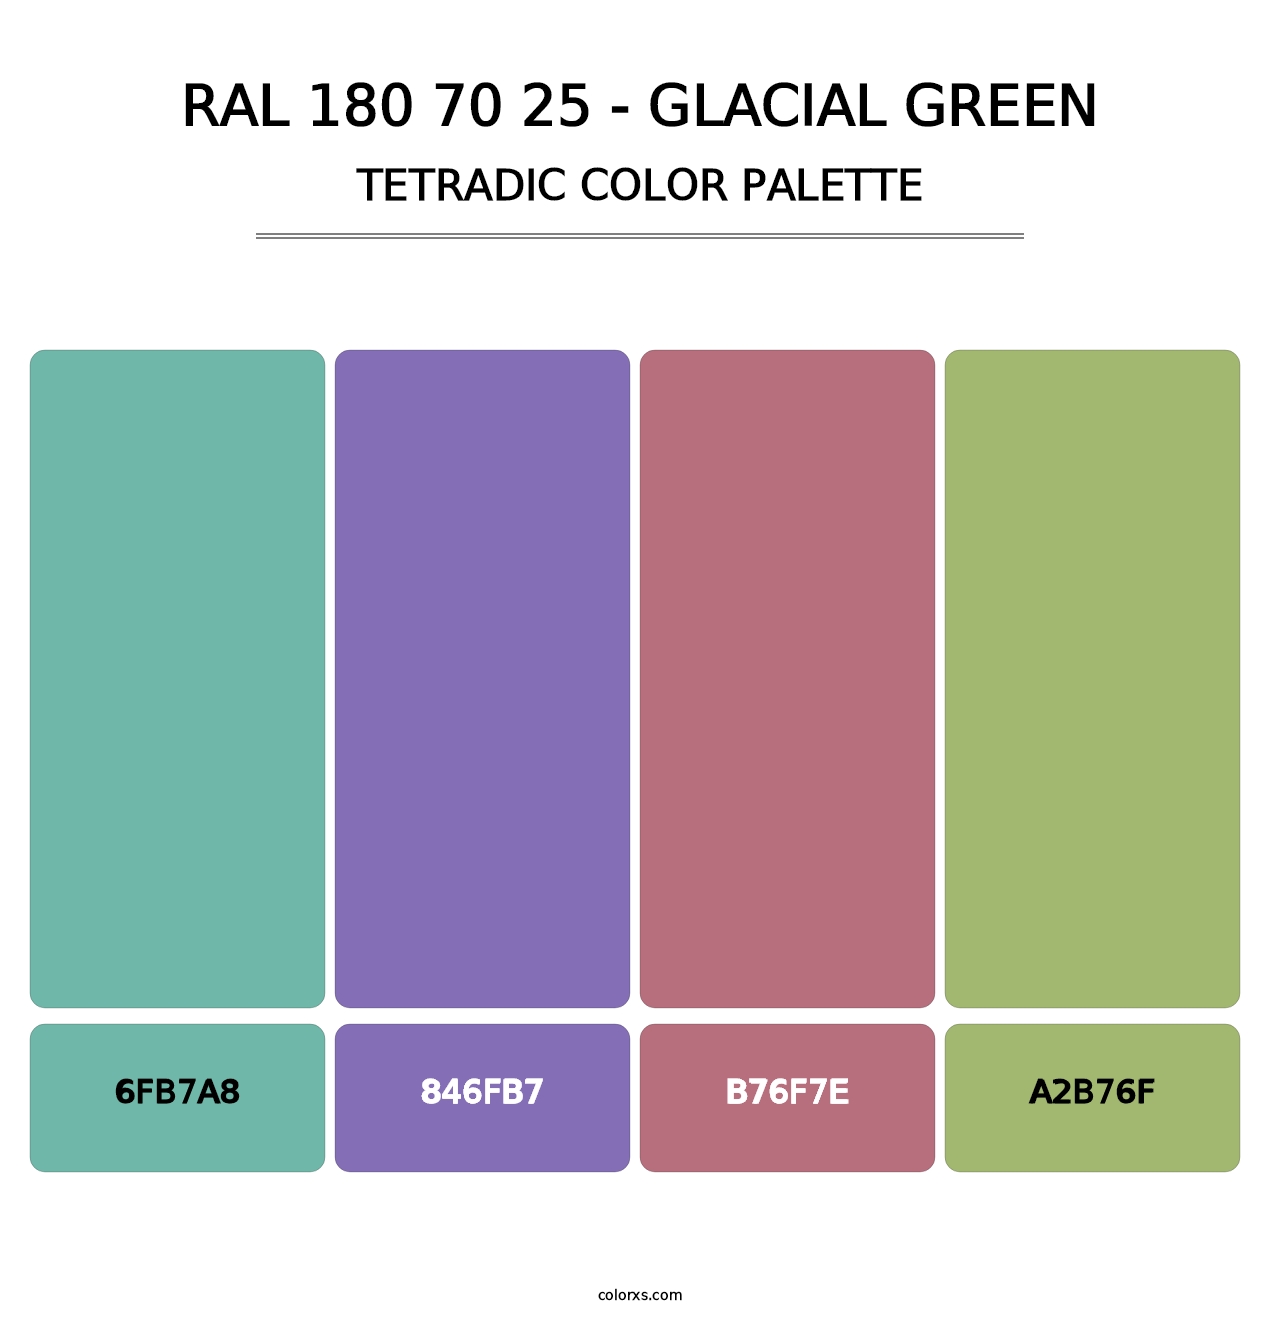 RAL 180 70 25 - Glacial Green - Tetradic Color Palette